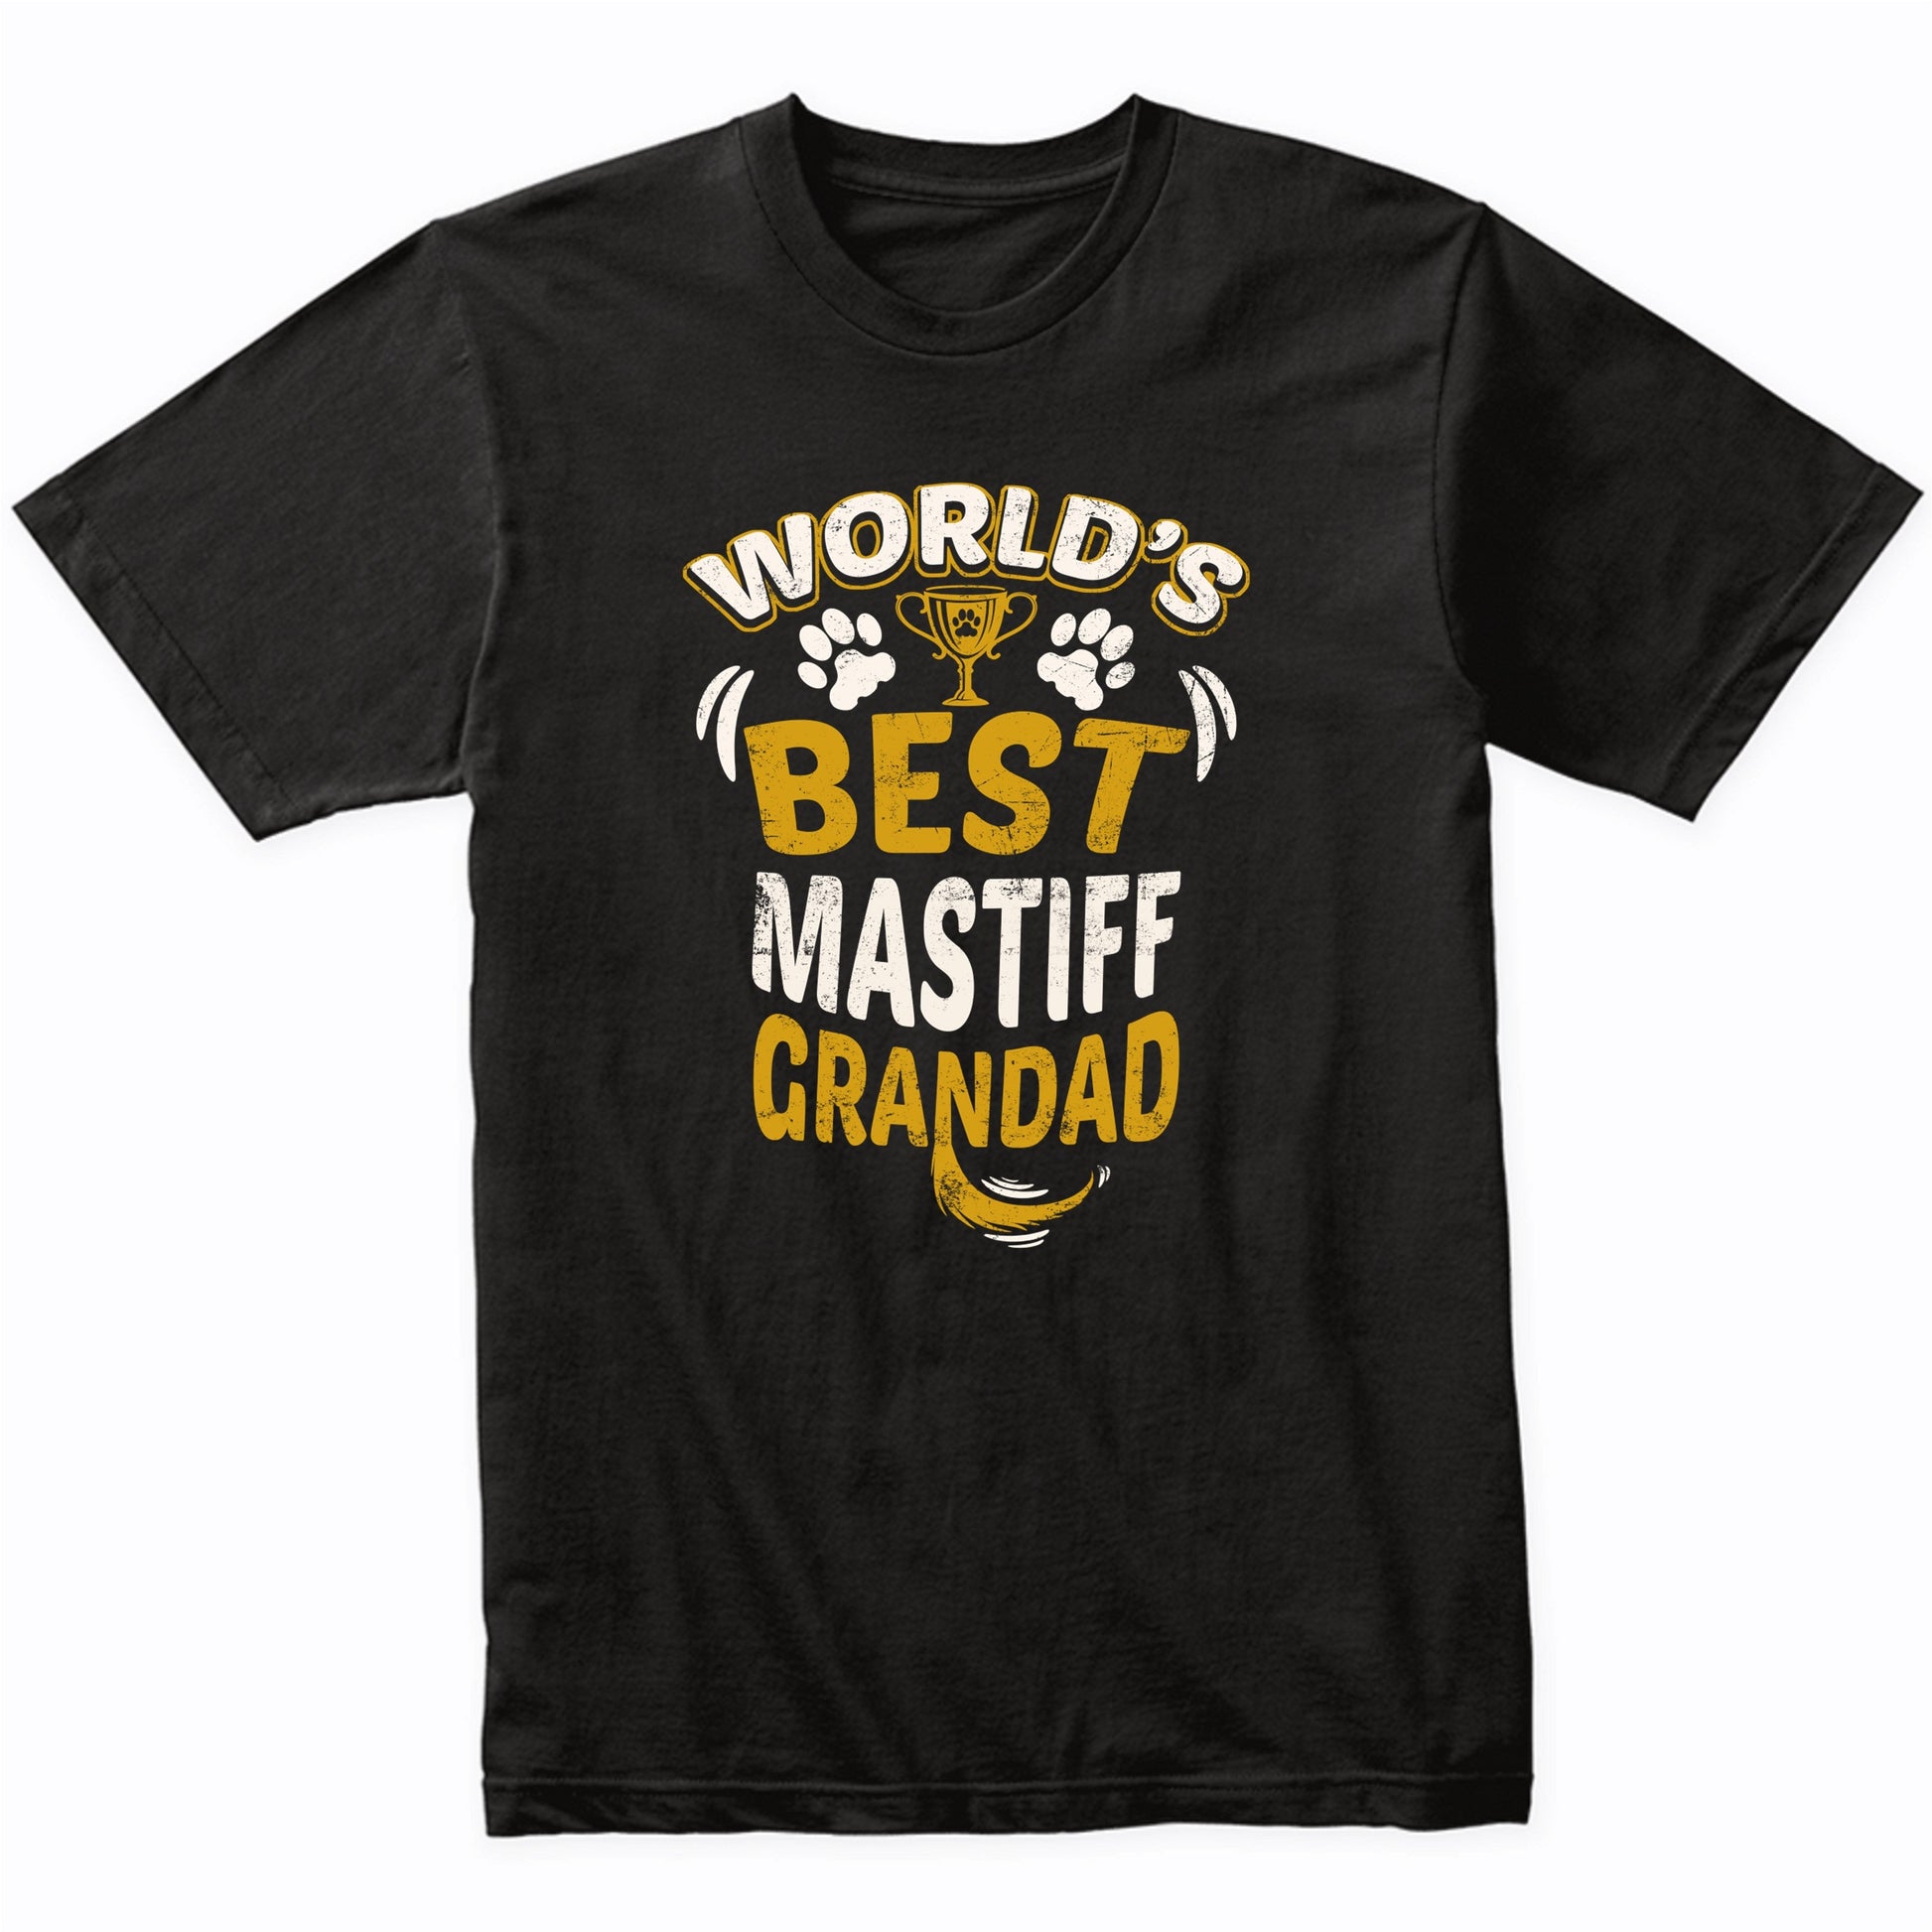 World's Best Mastiff Grandad Graphic T-Shirt